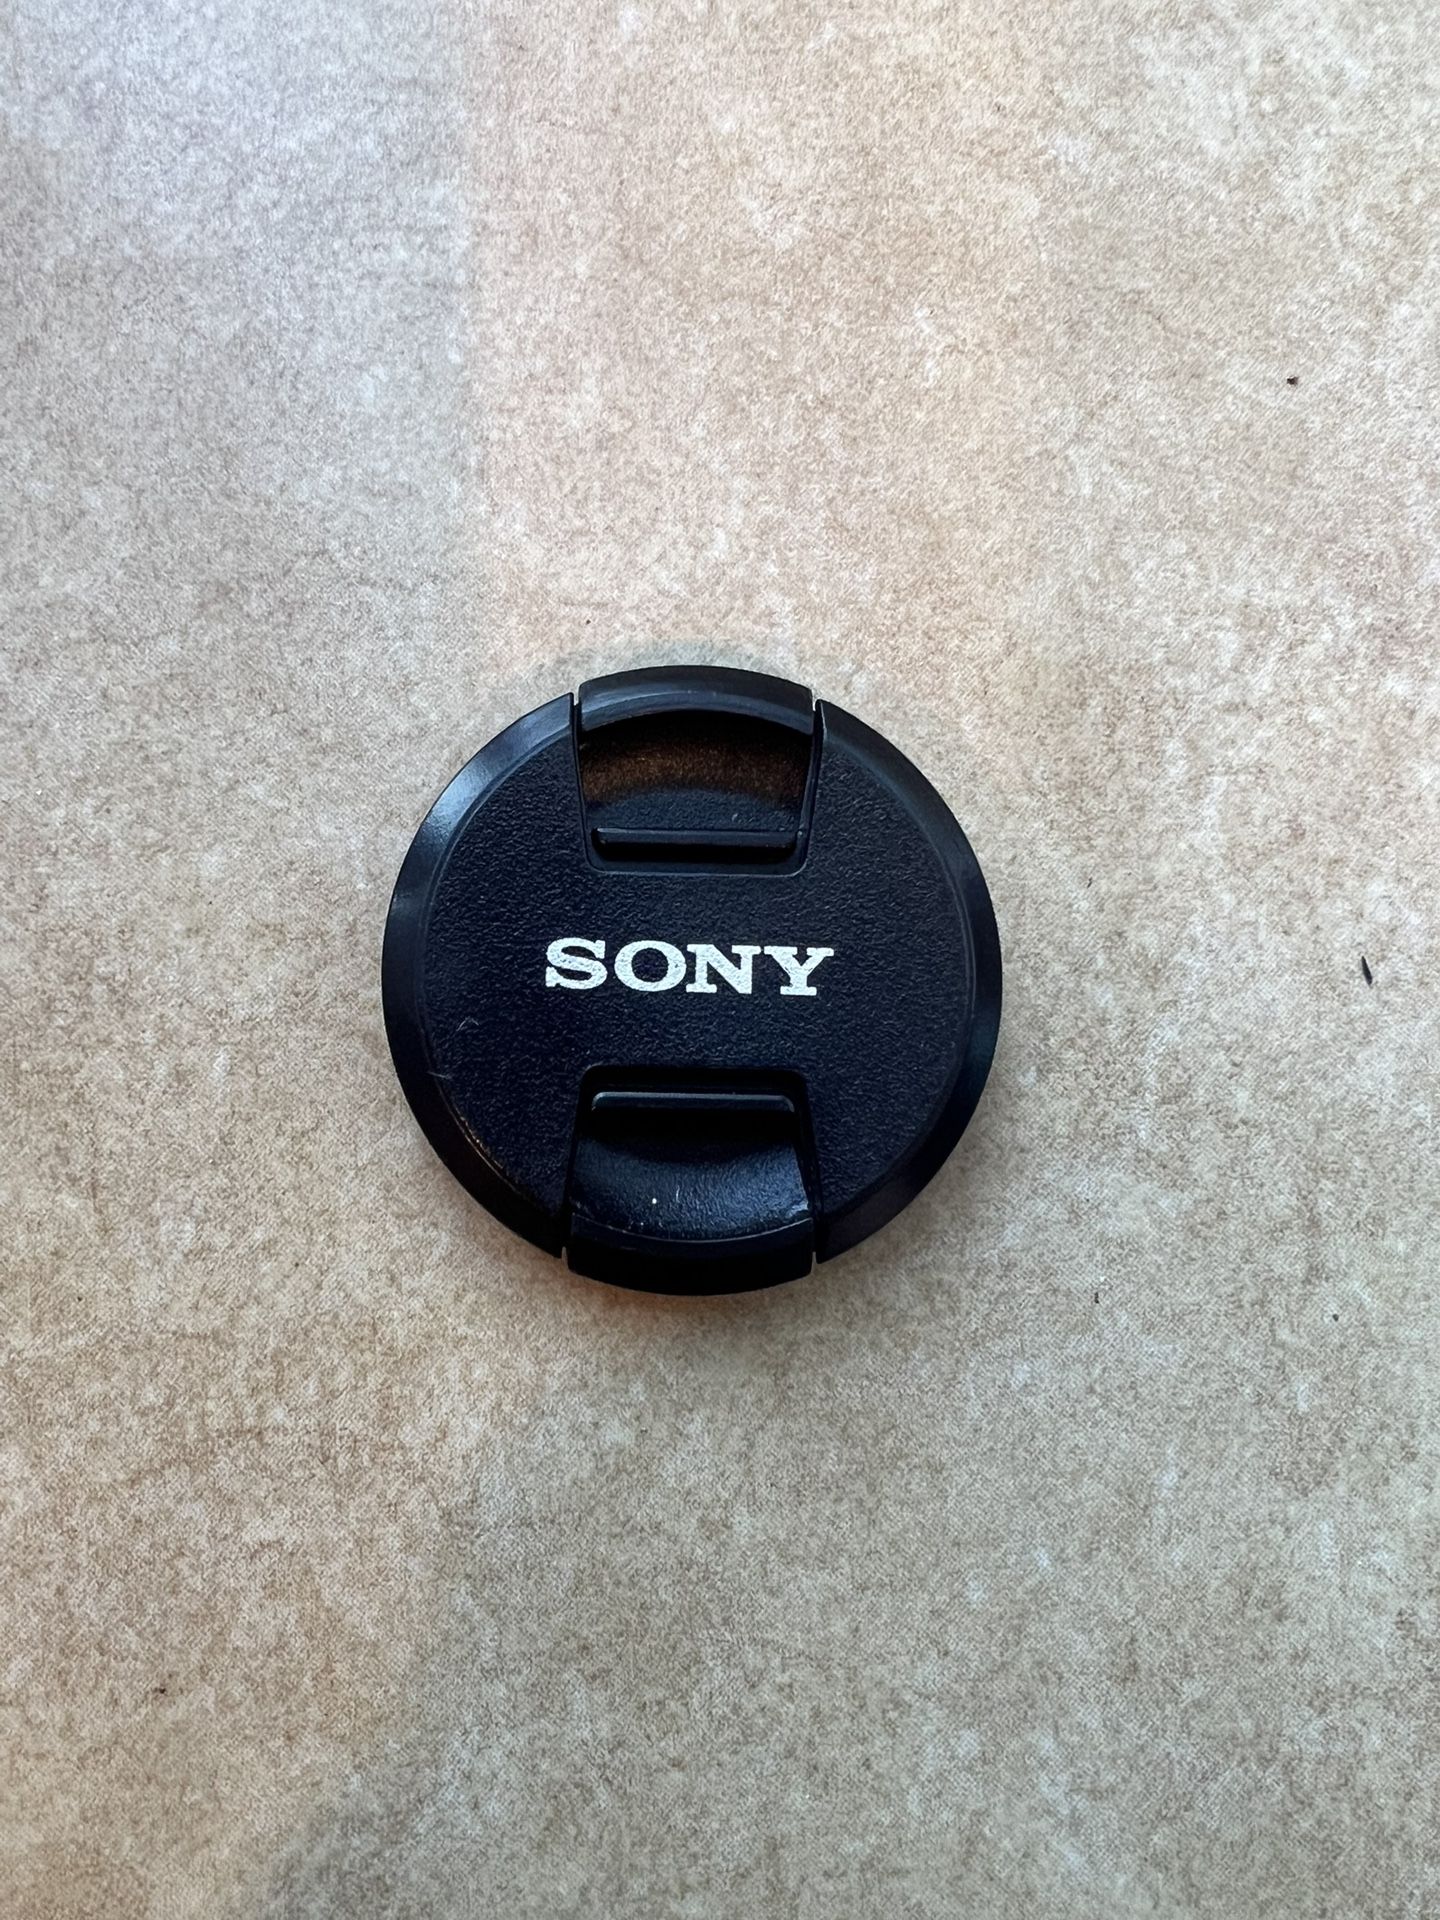 Sony DLSR Lens Cap. 